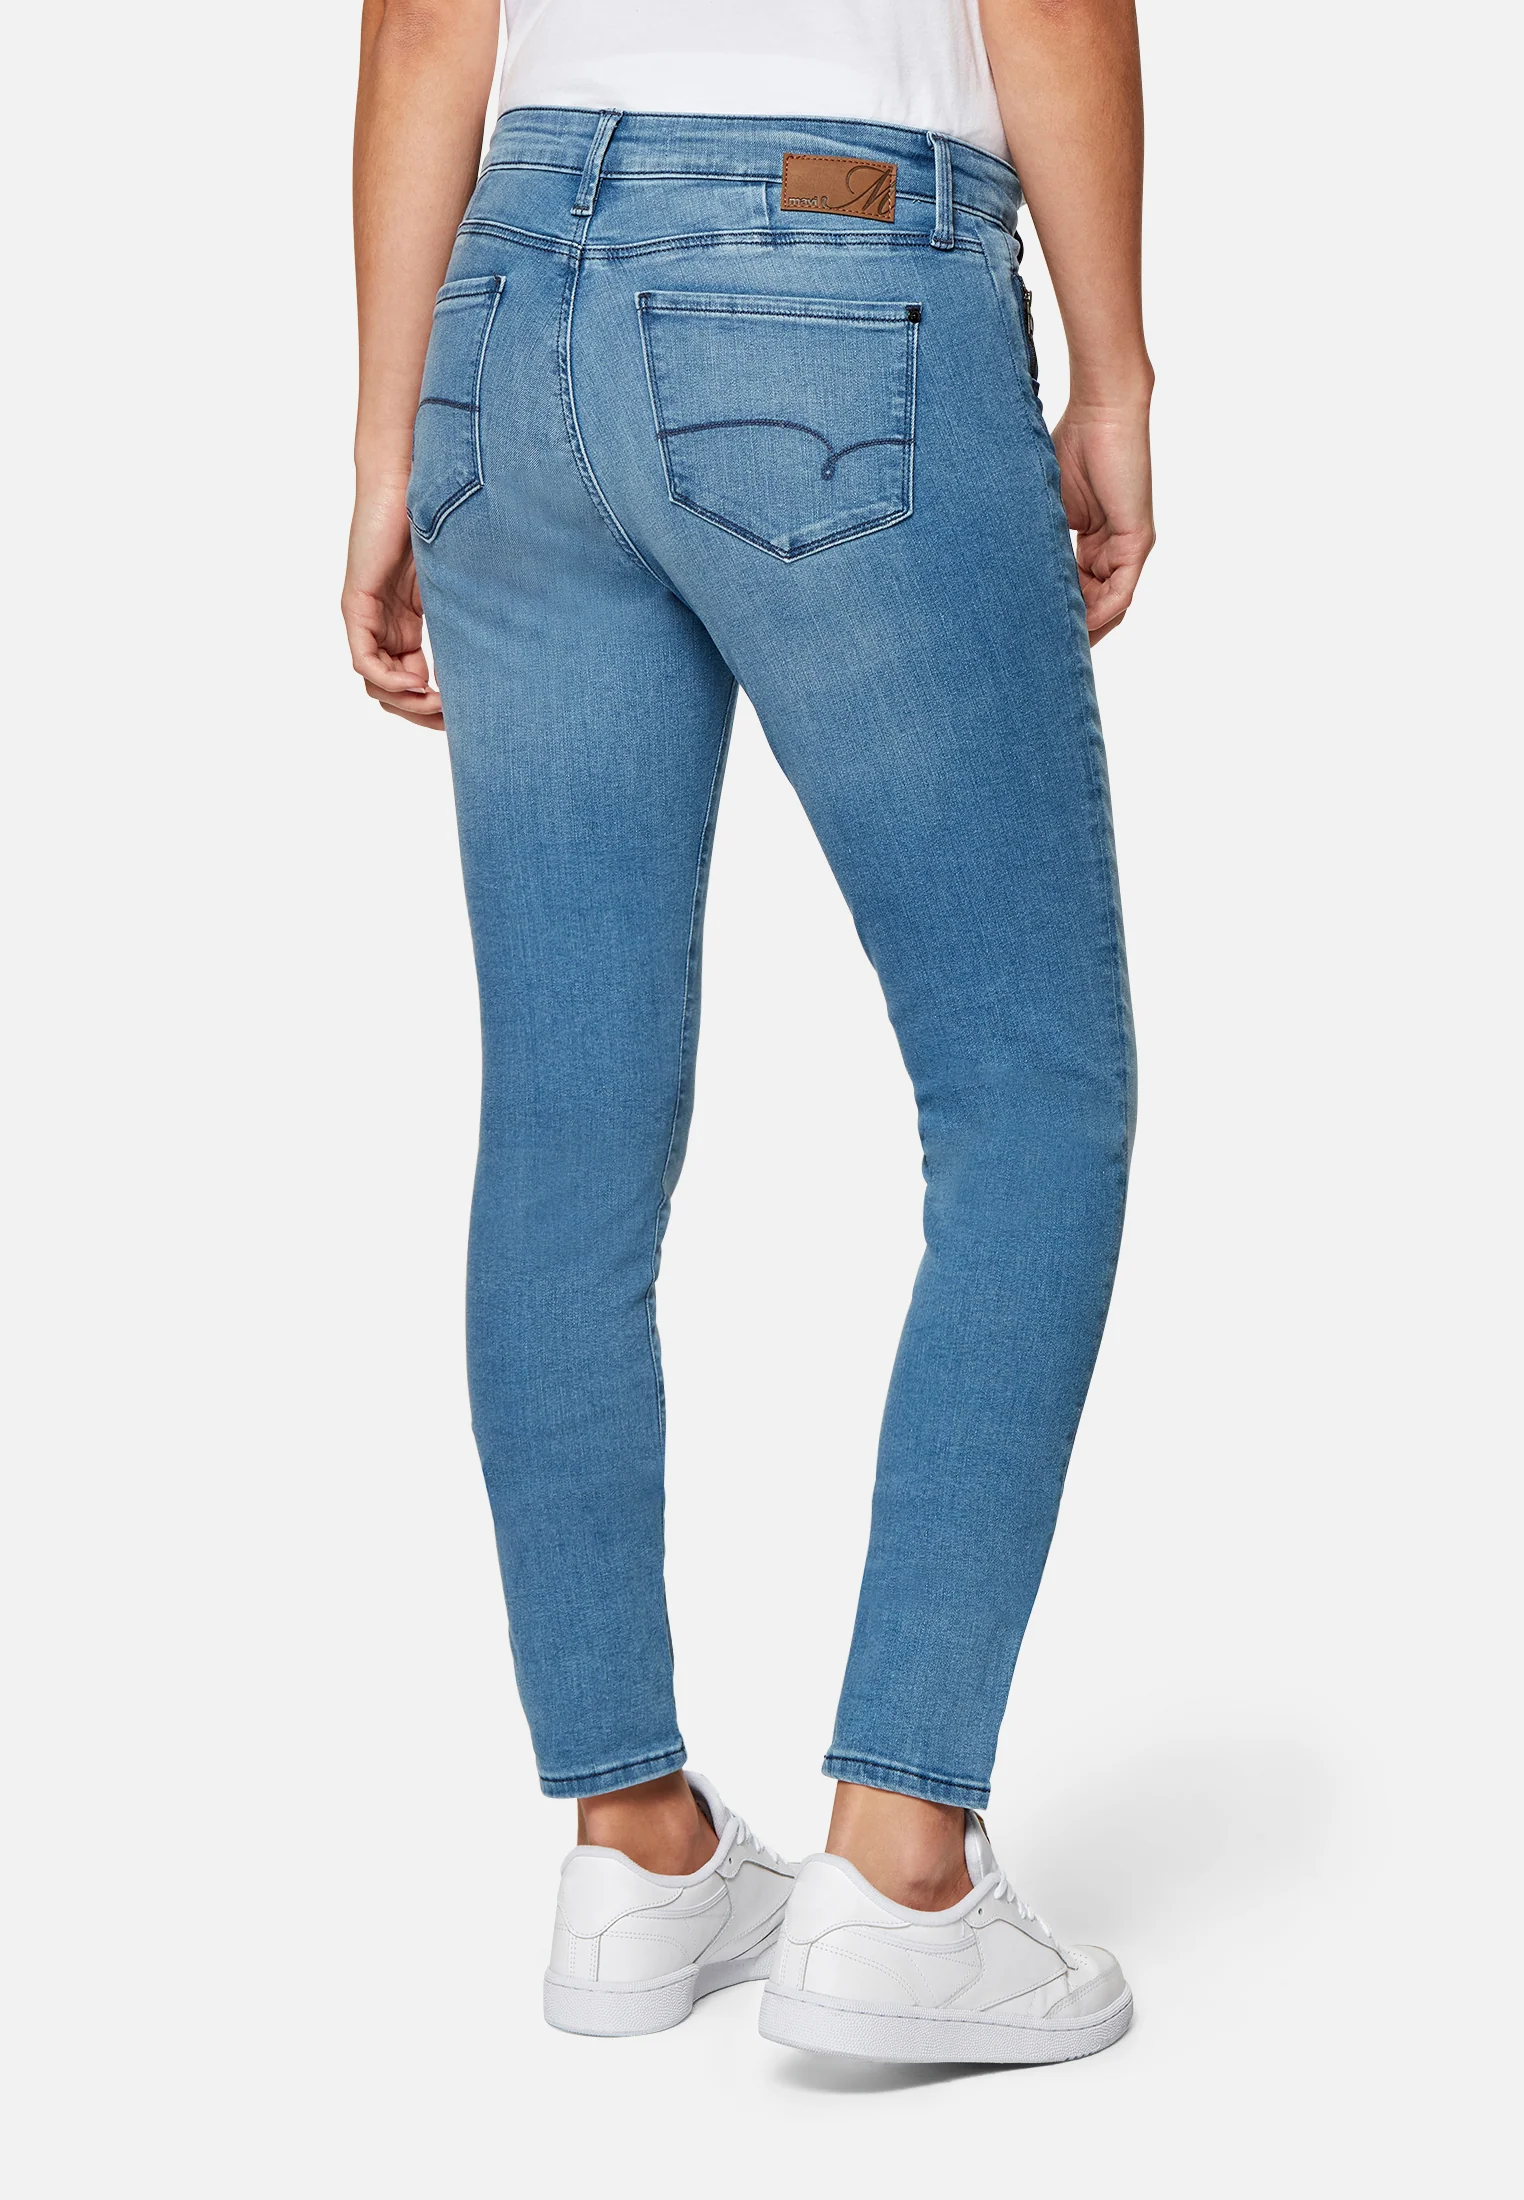 Mavi ADRIANA | Mid Rise, Super Skinny Jeans in LT Glam 